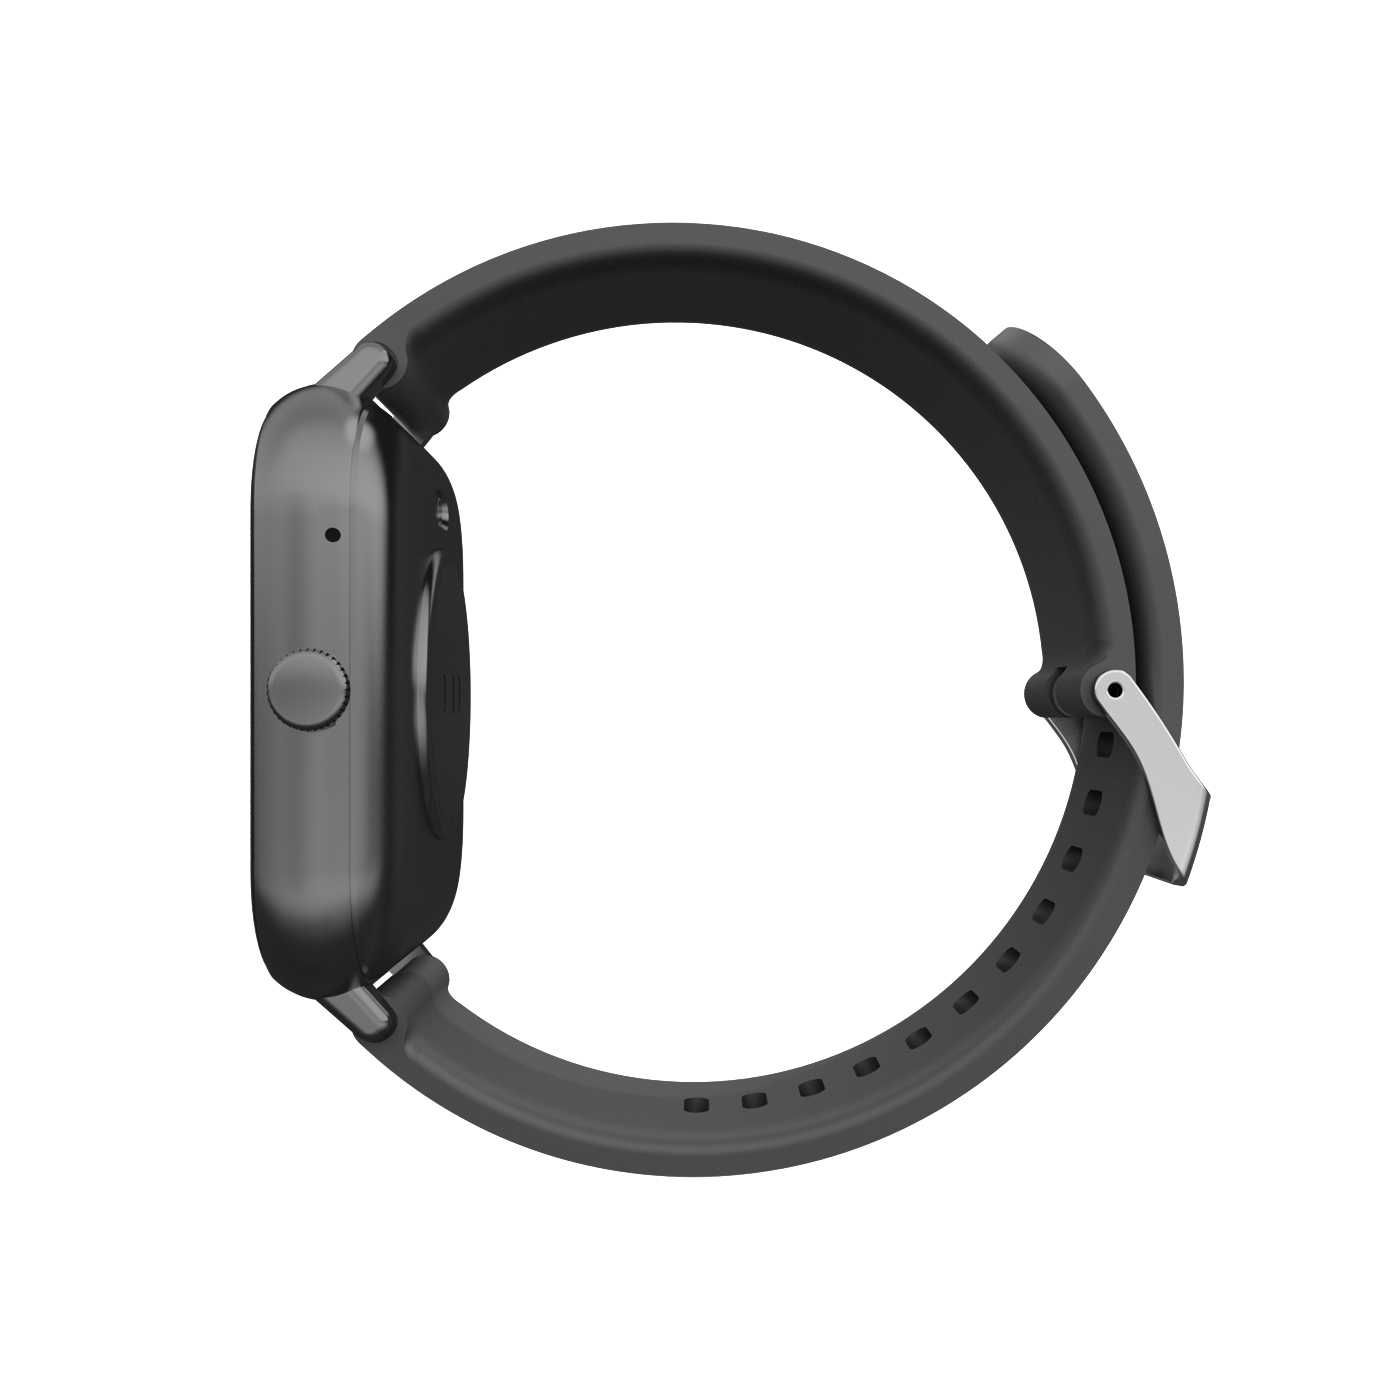 Buytech smartwatch cassa nera black cinturino in silicone BY-ALFA-BK